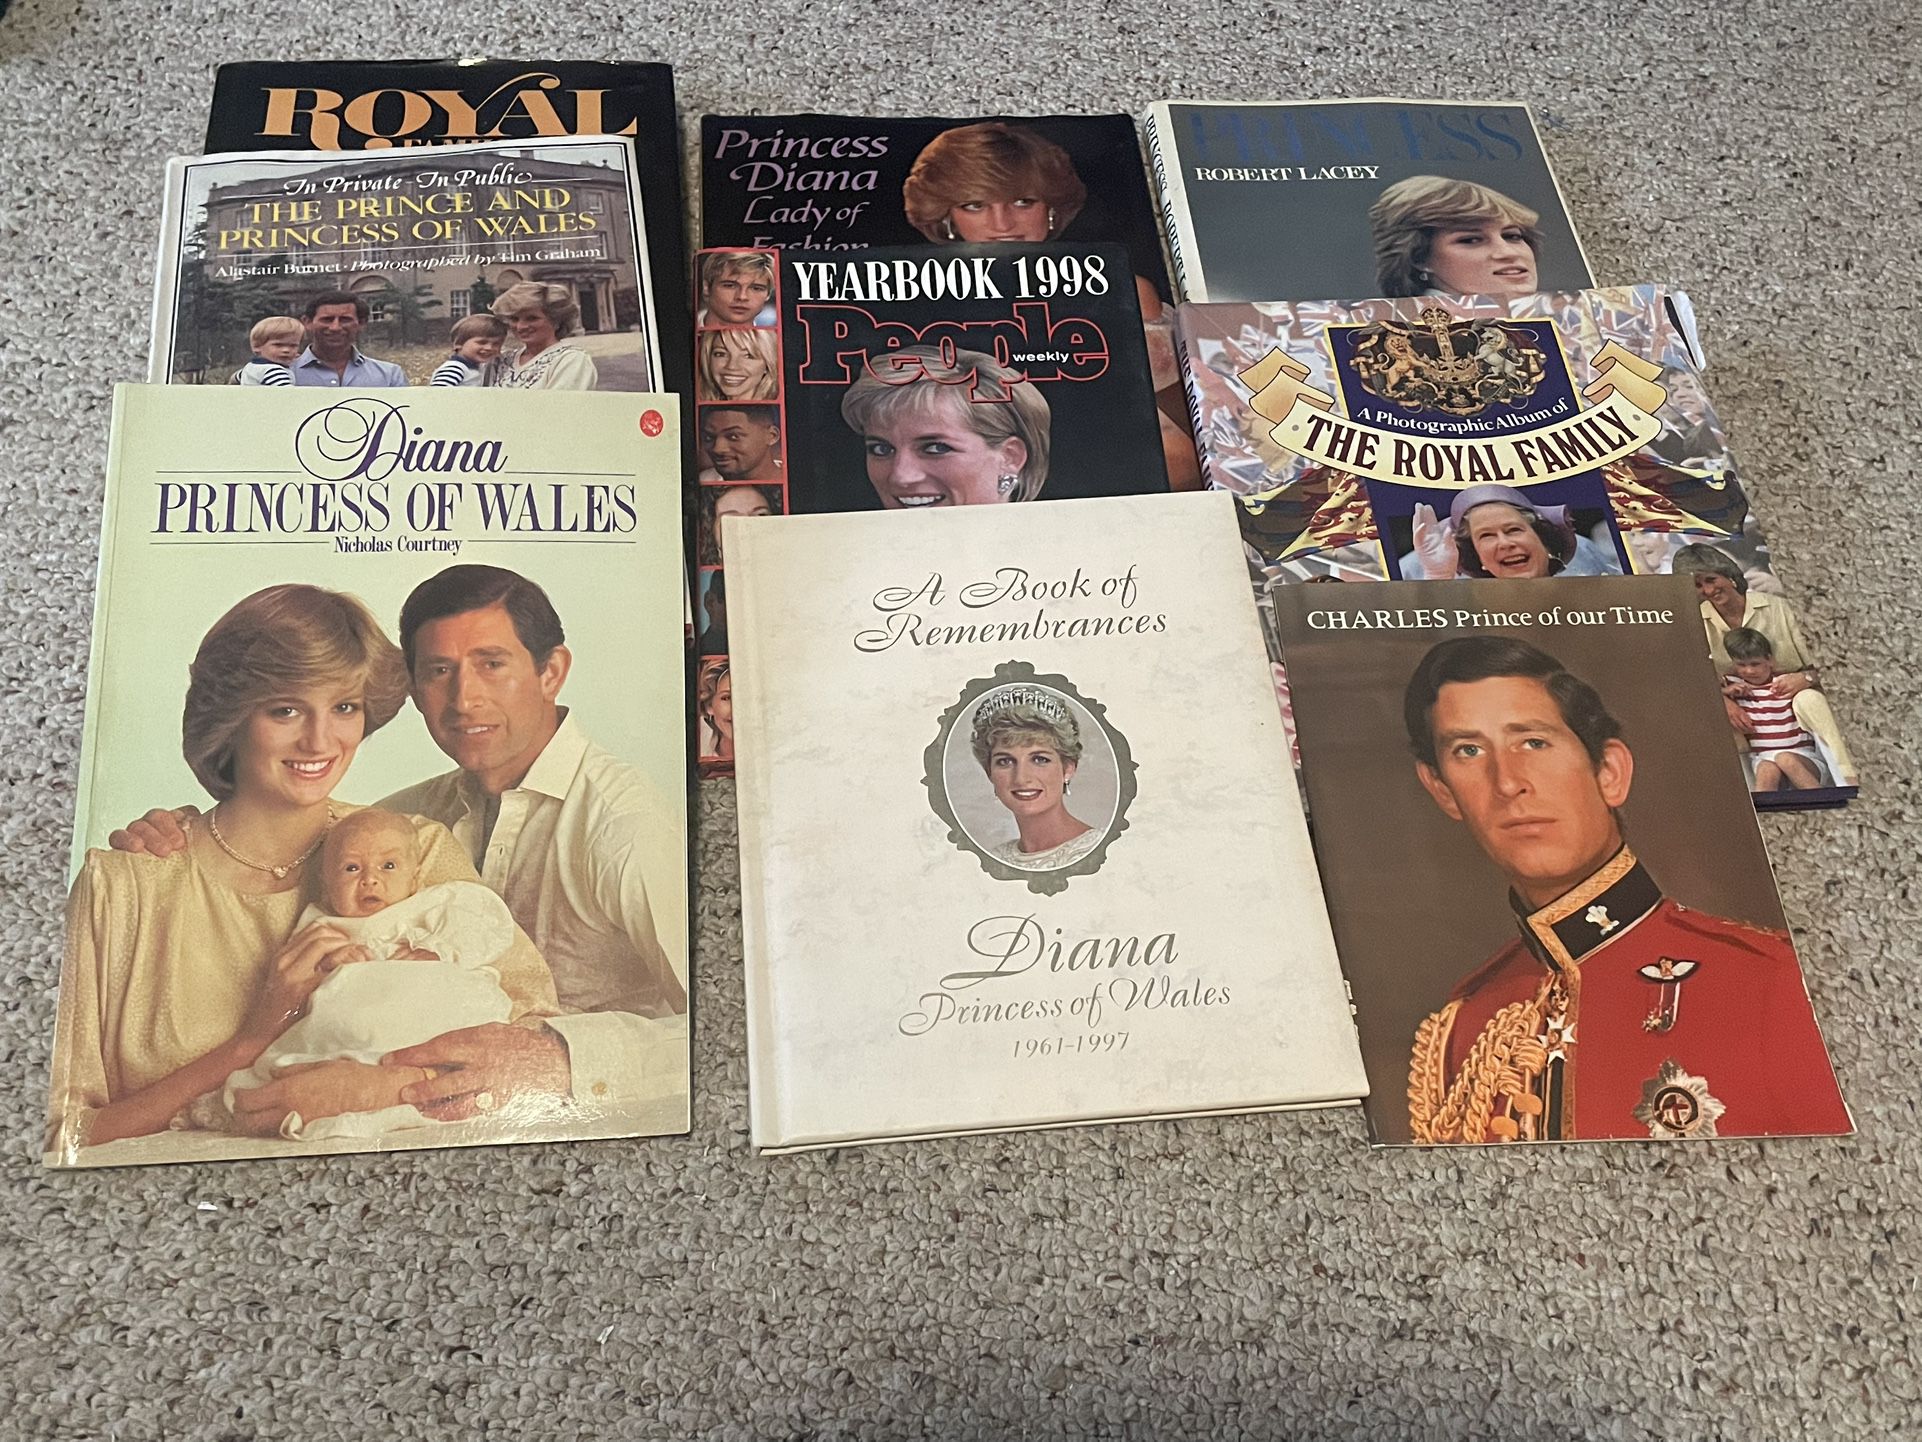 Books on Princess Diana and the Royal Family